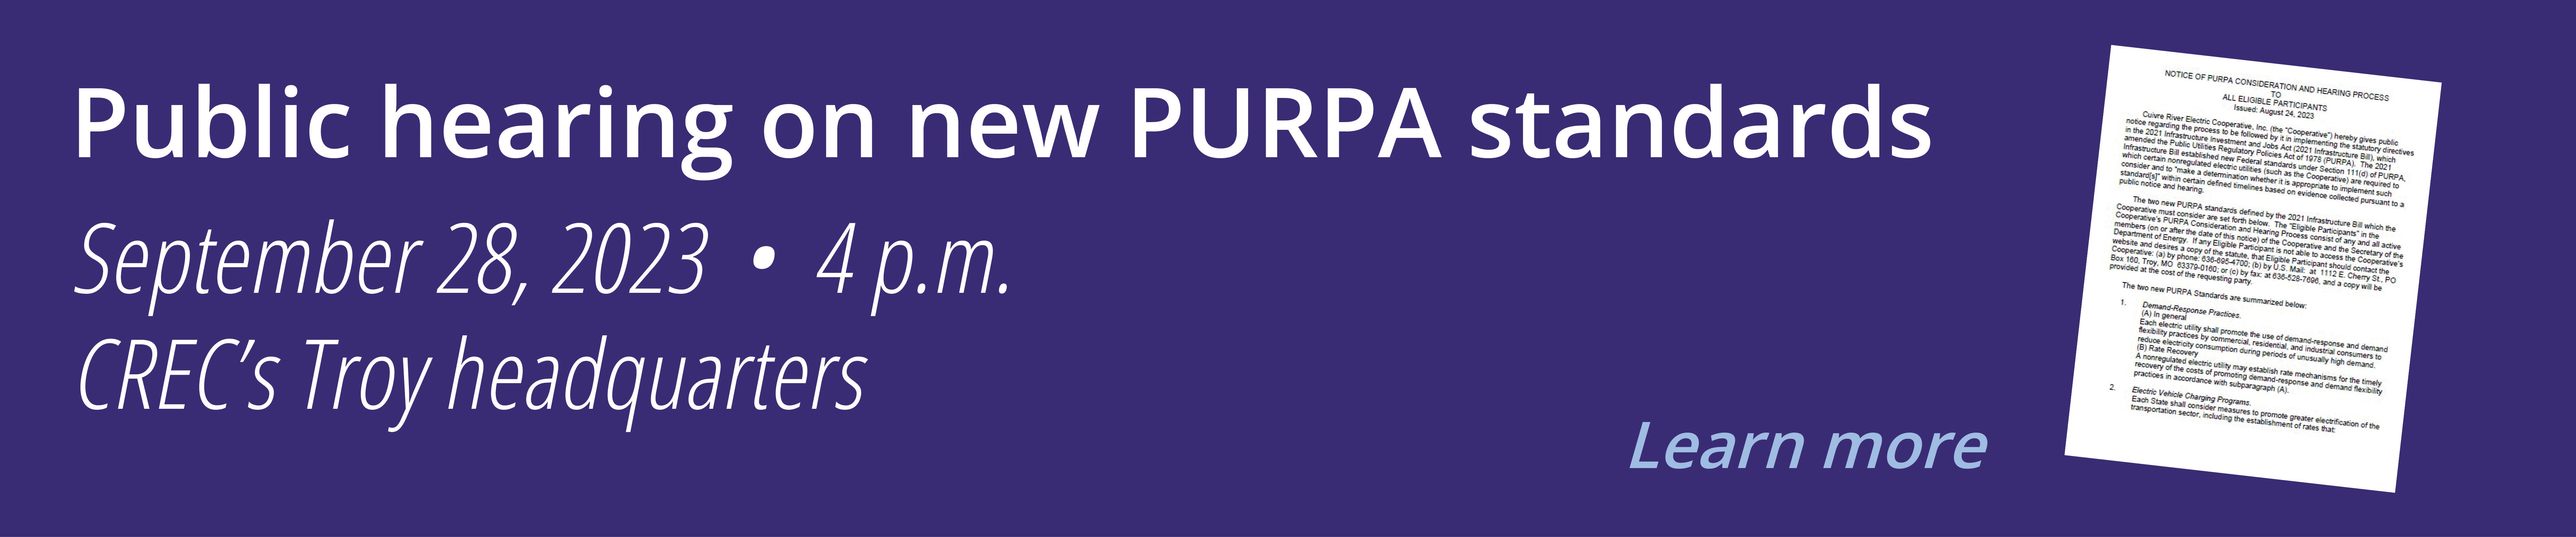 Notice of New PURPA standards